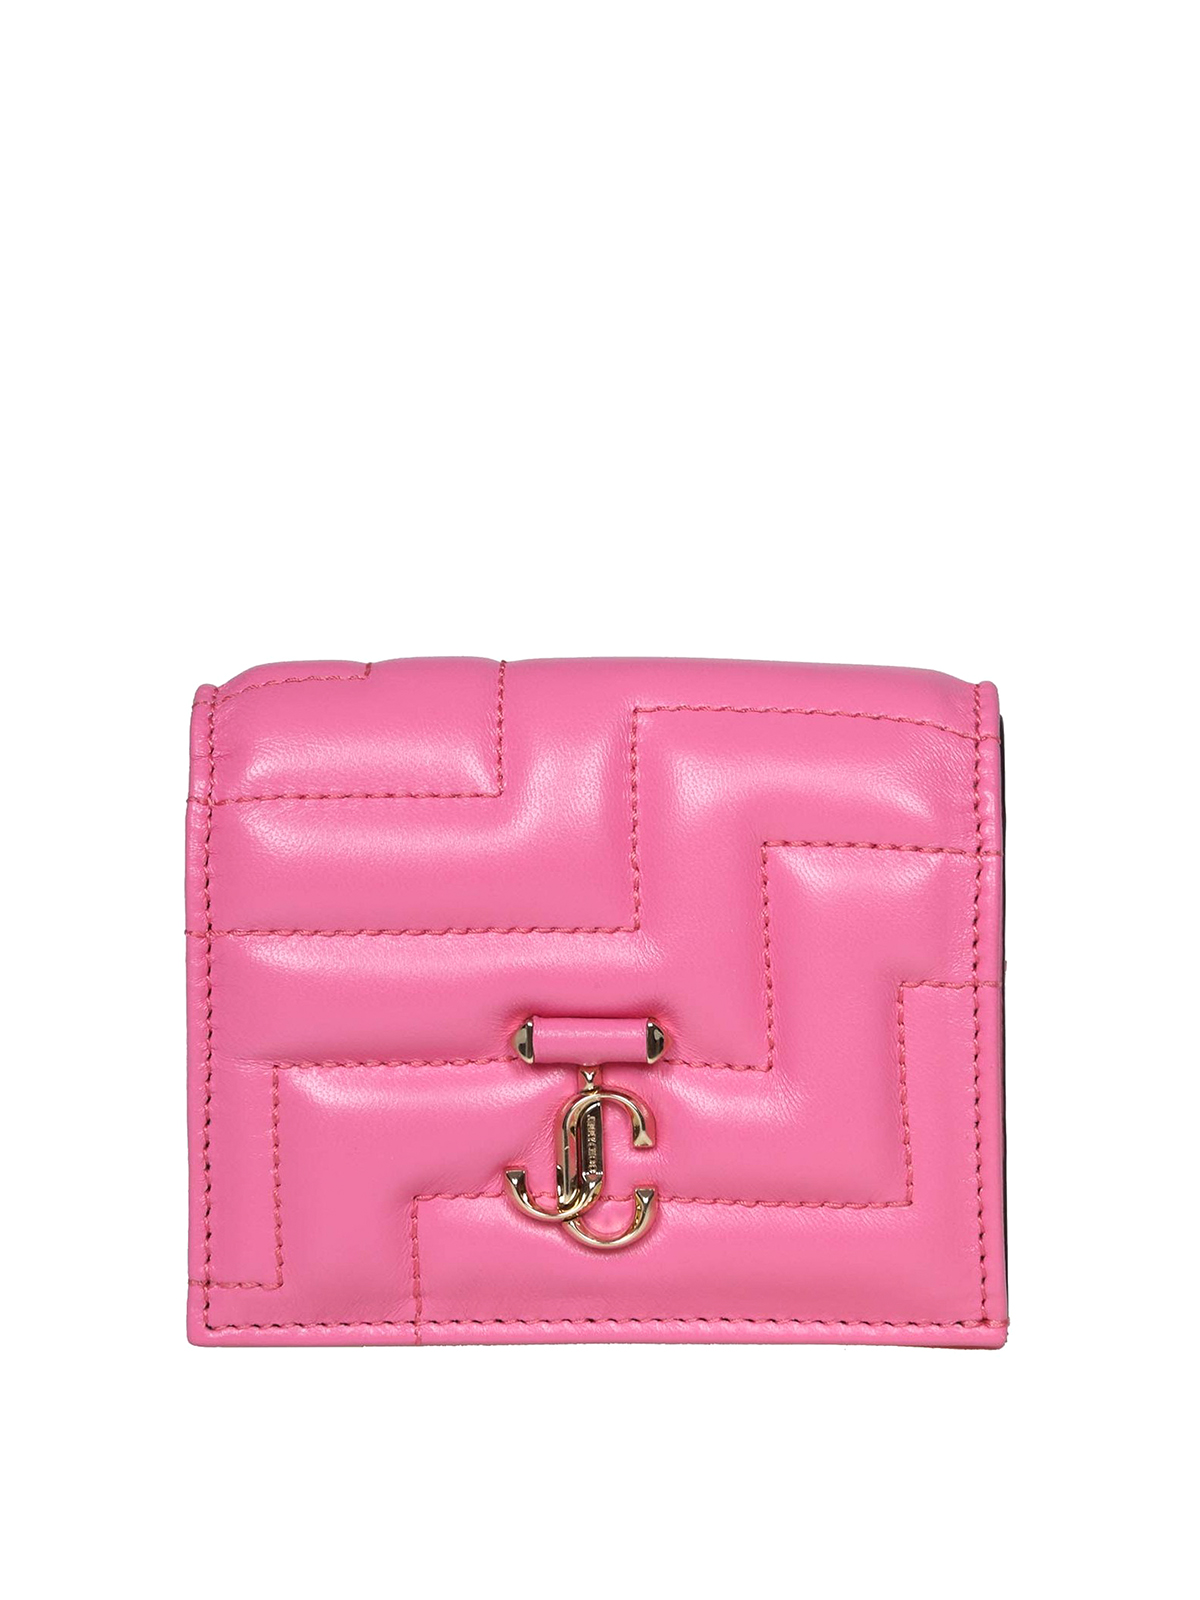 Shop Jimmy Choo Pink Avenue Nappa Leather Wallet